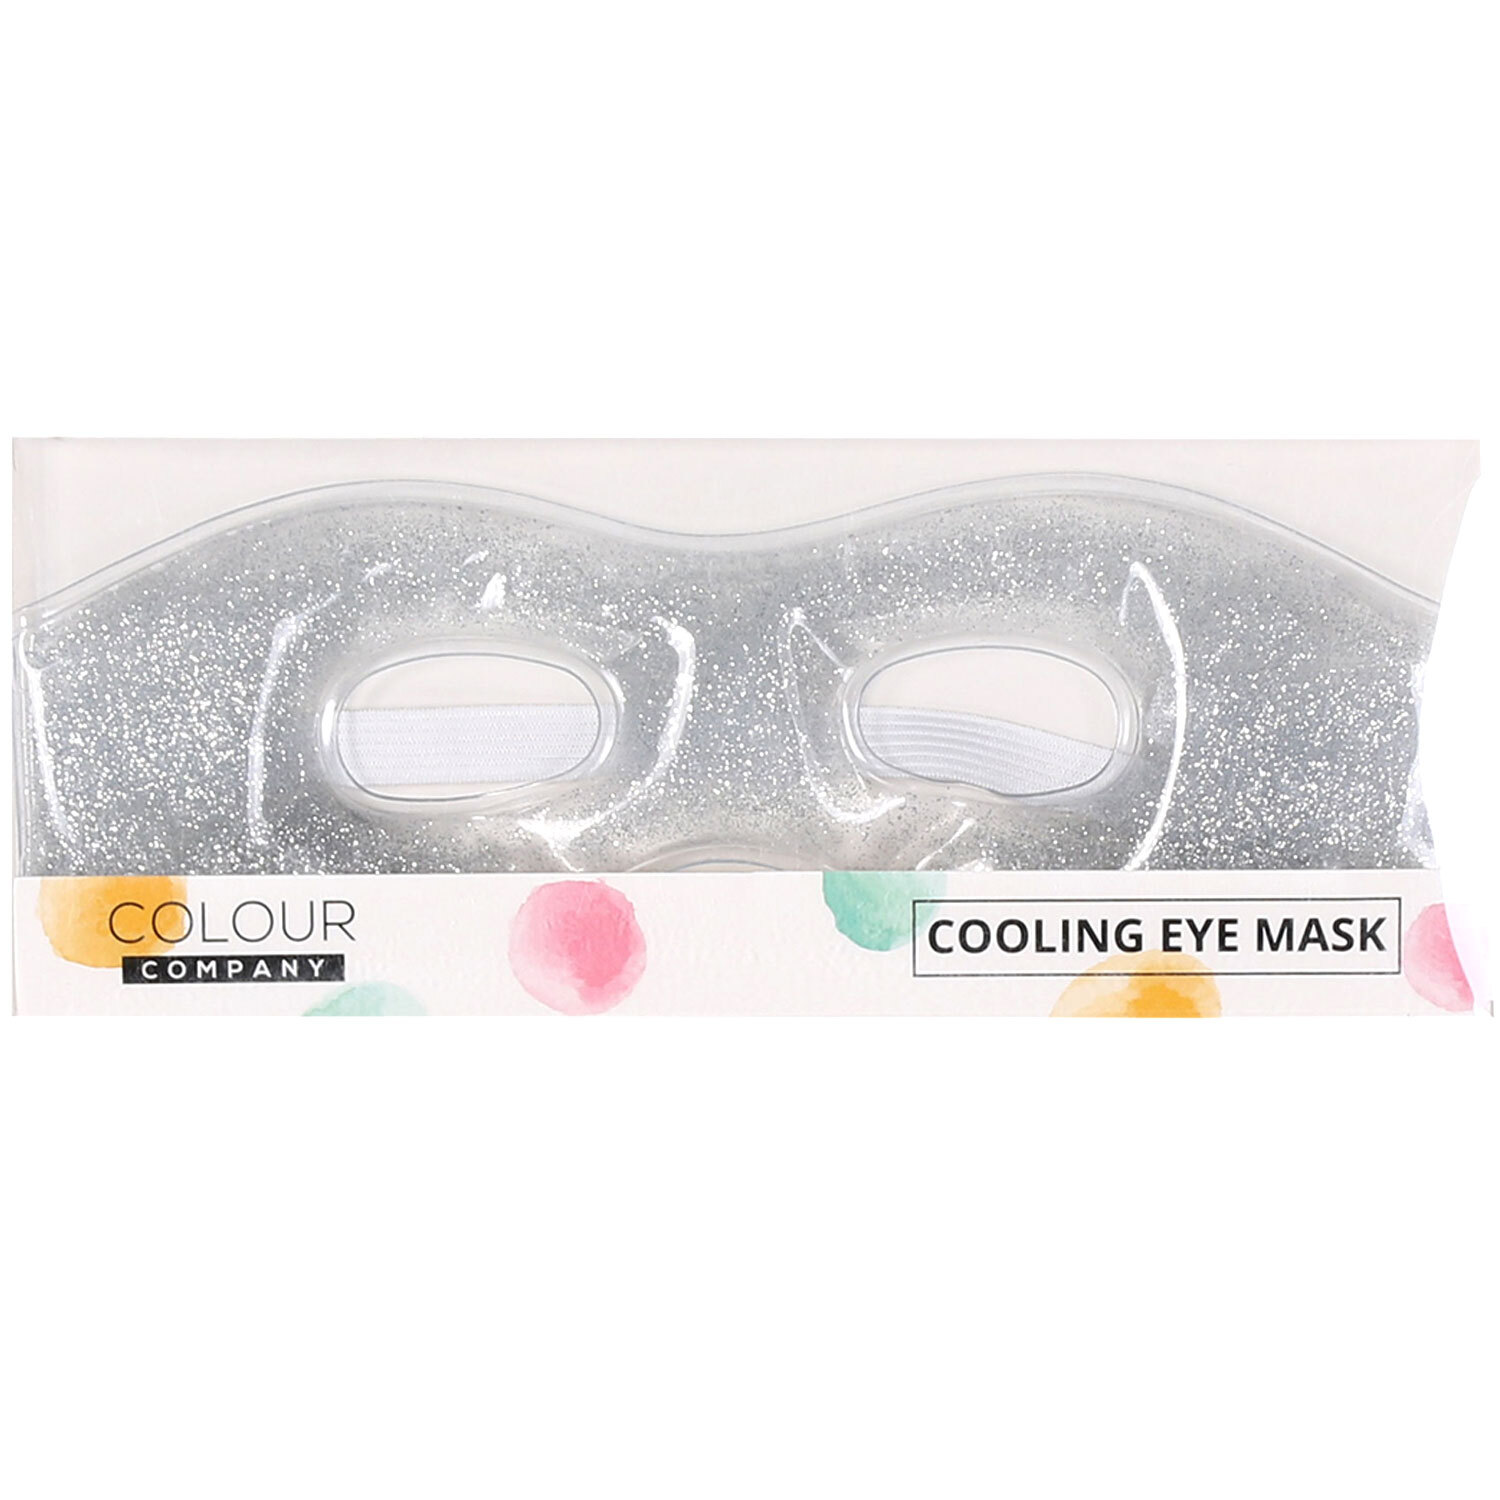 Colour Company Cooling Eye Mask Image 1